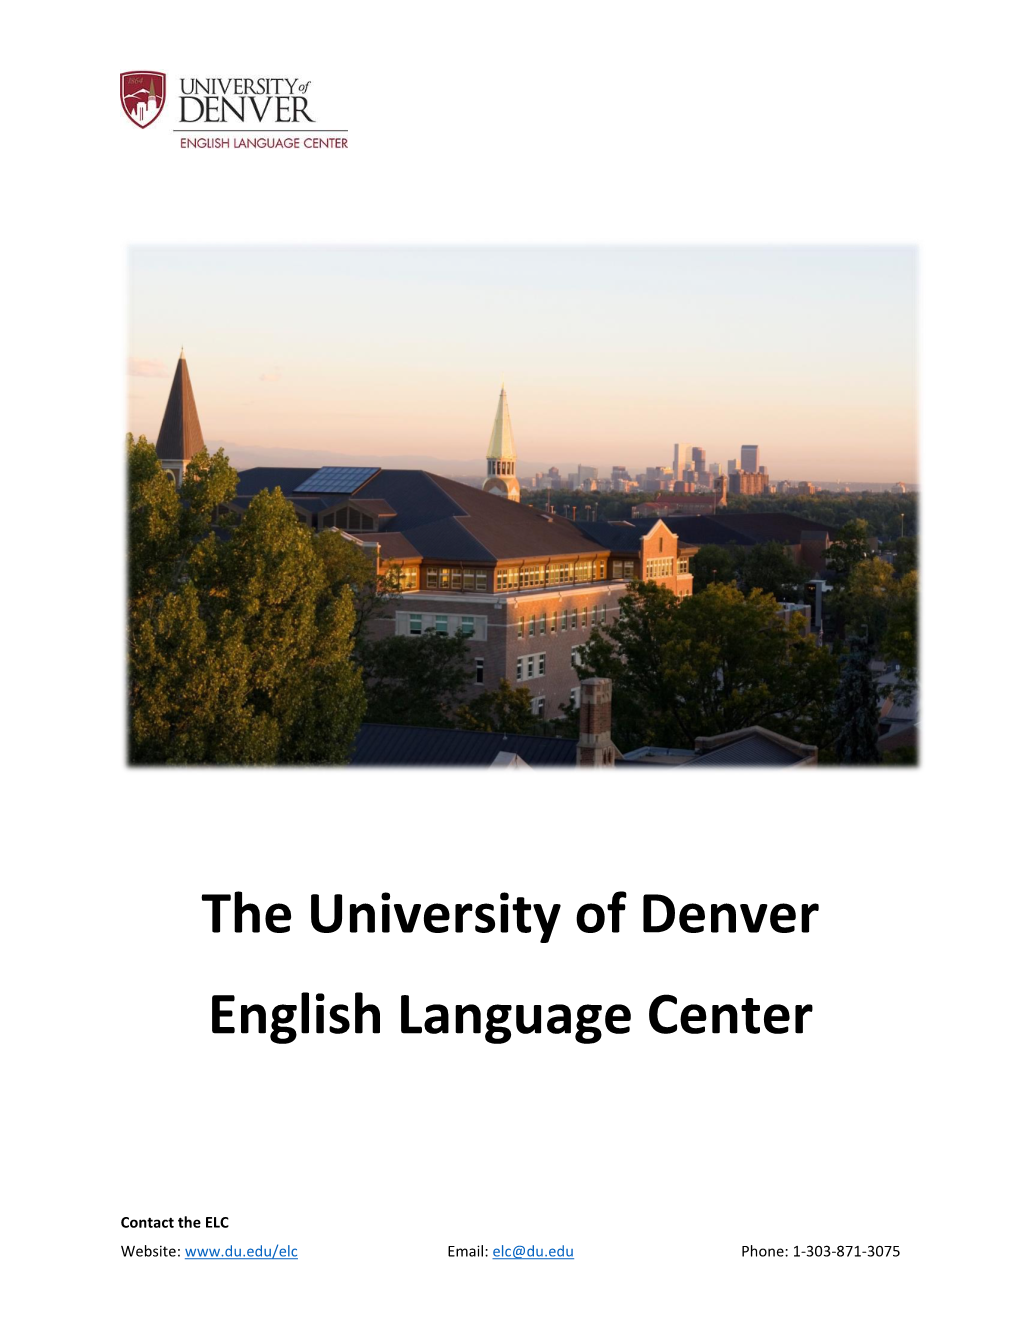 The University of Denver English Language Center